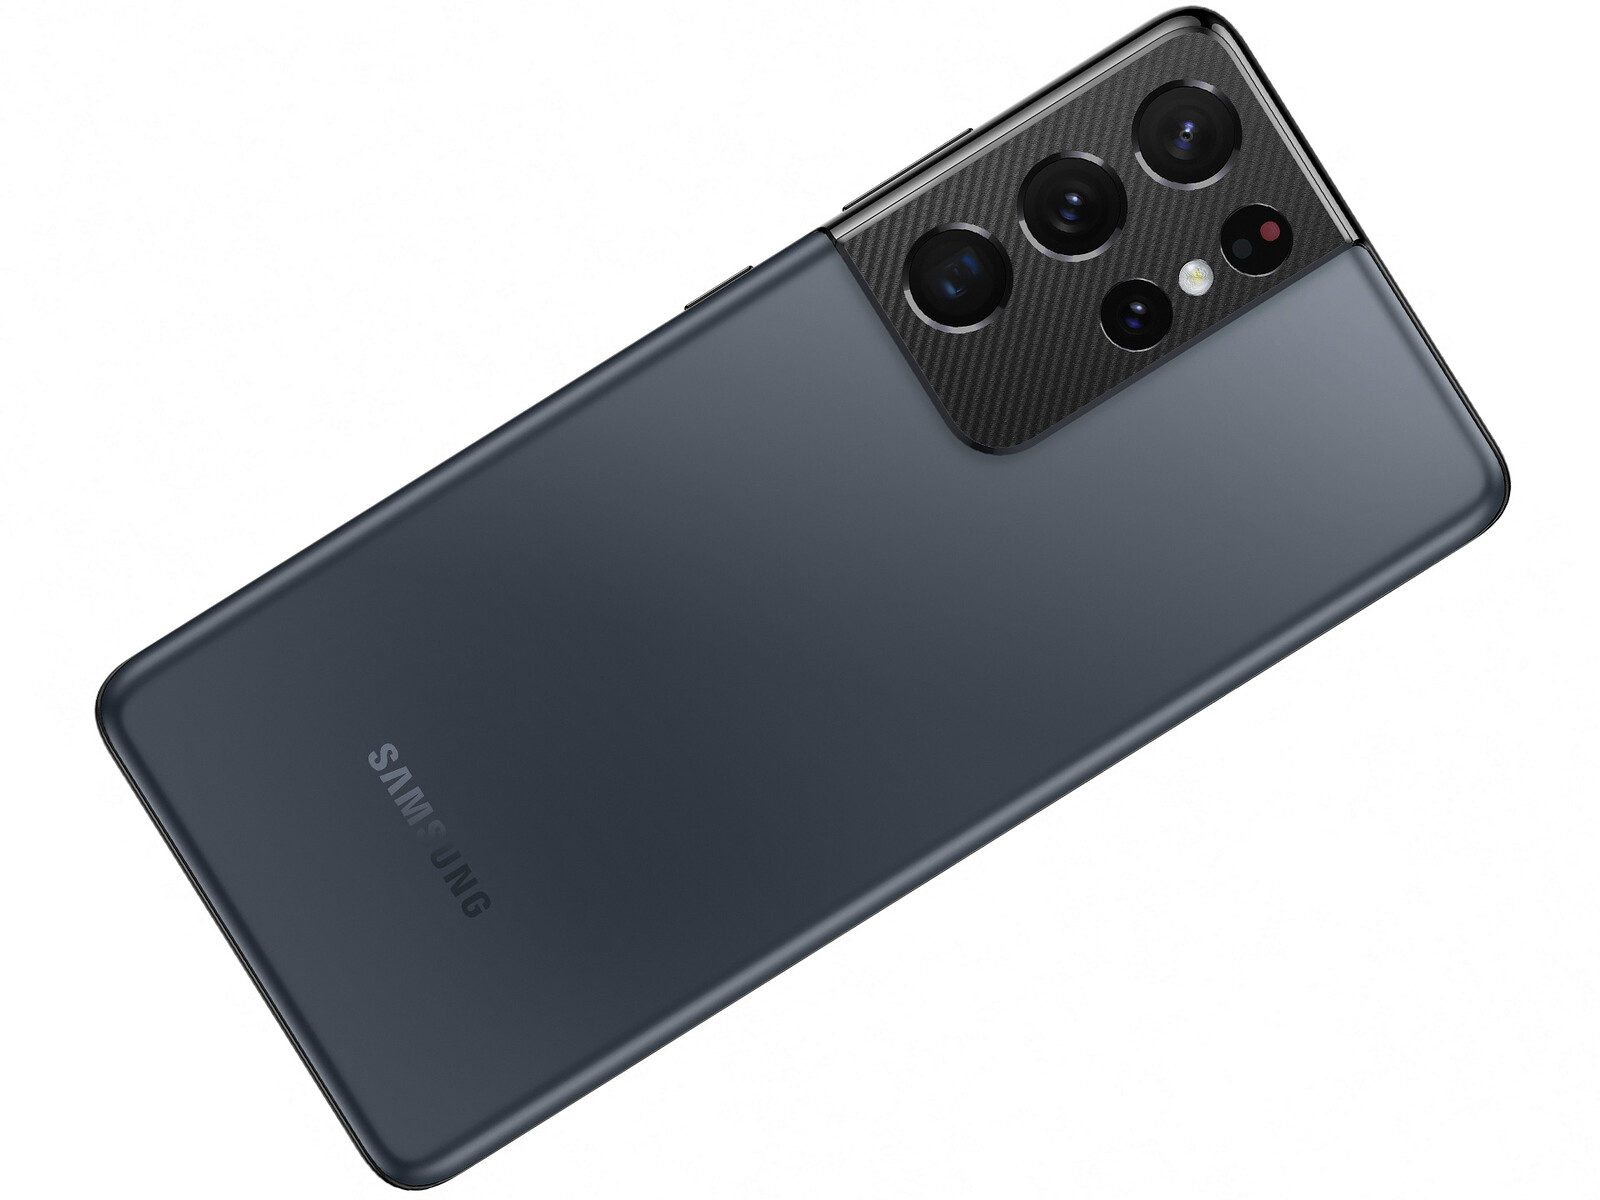 Samsung Galaxy S22 Ultra vs S21 Ultra : le jeu des 7 différences